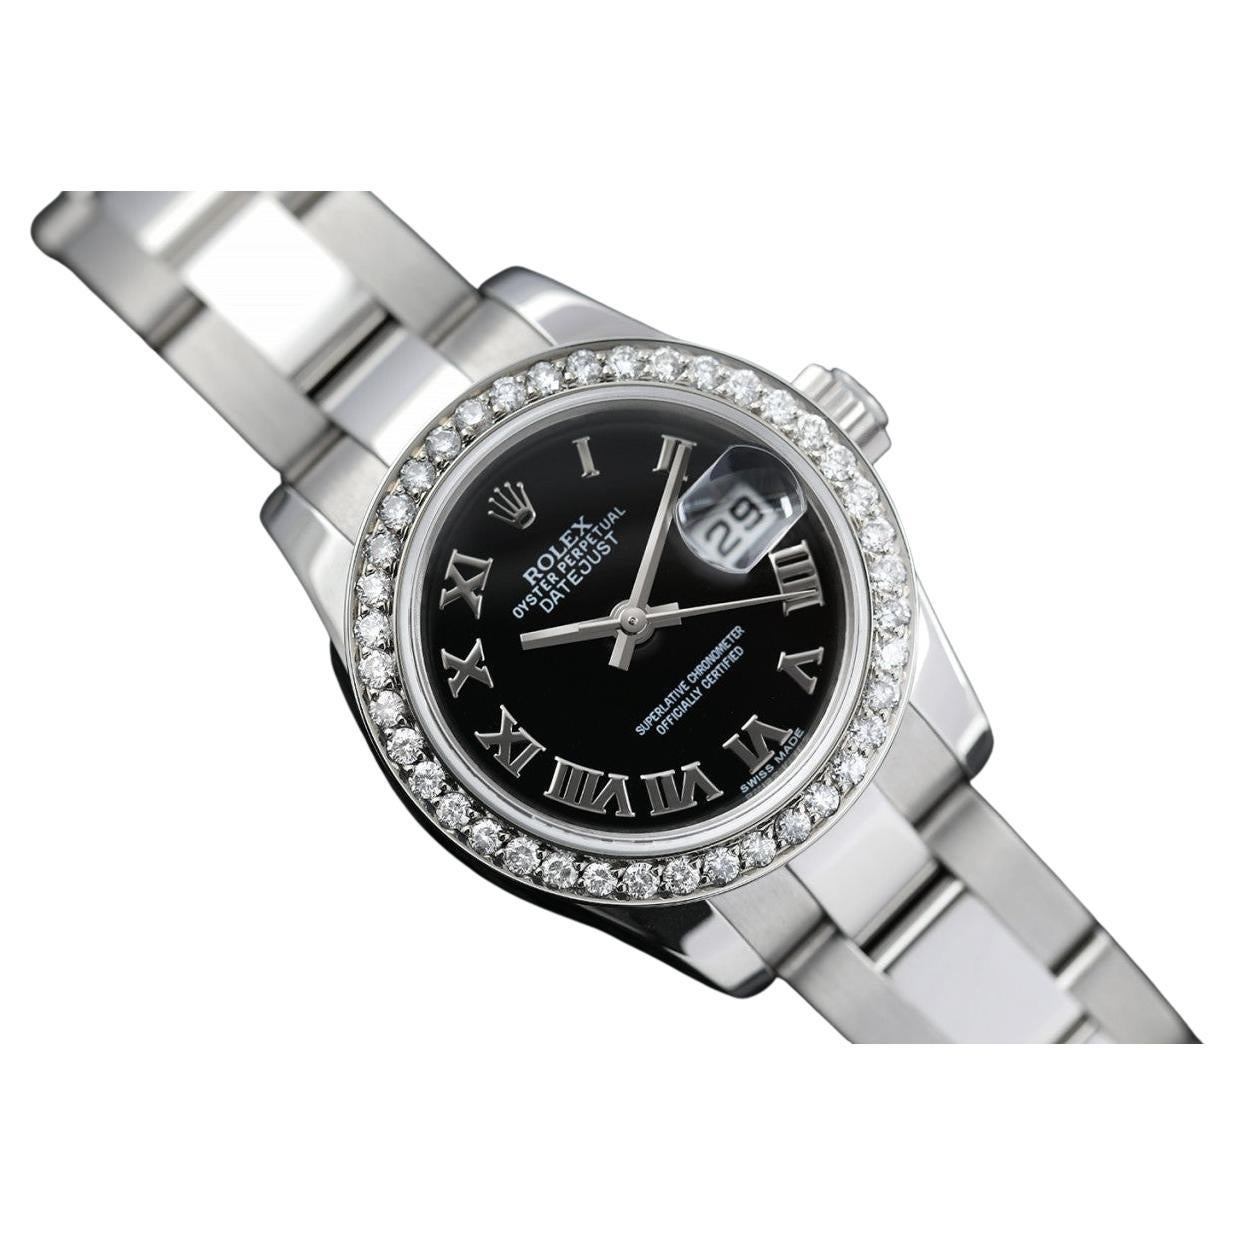 Rolex Datejust Ladies Stainless Steel Oyster with Diamond Bezel Watch